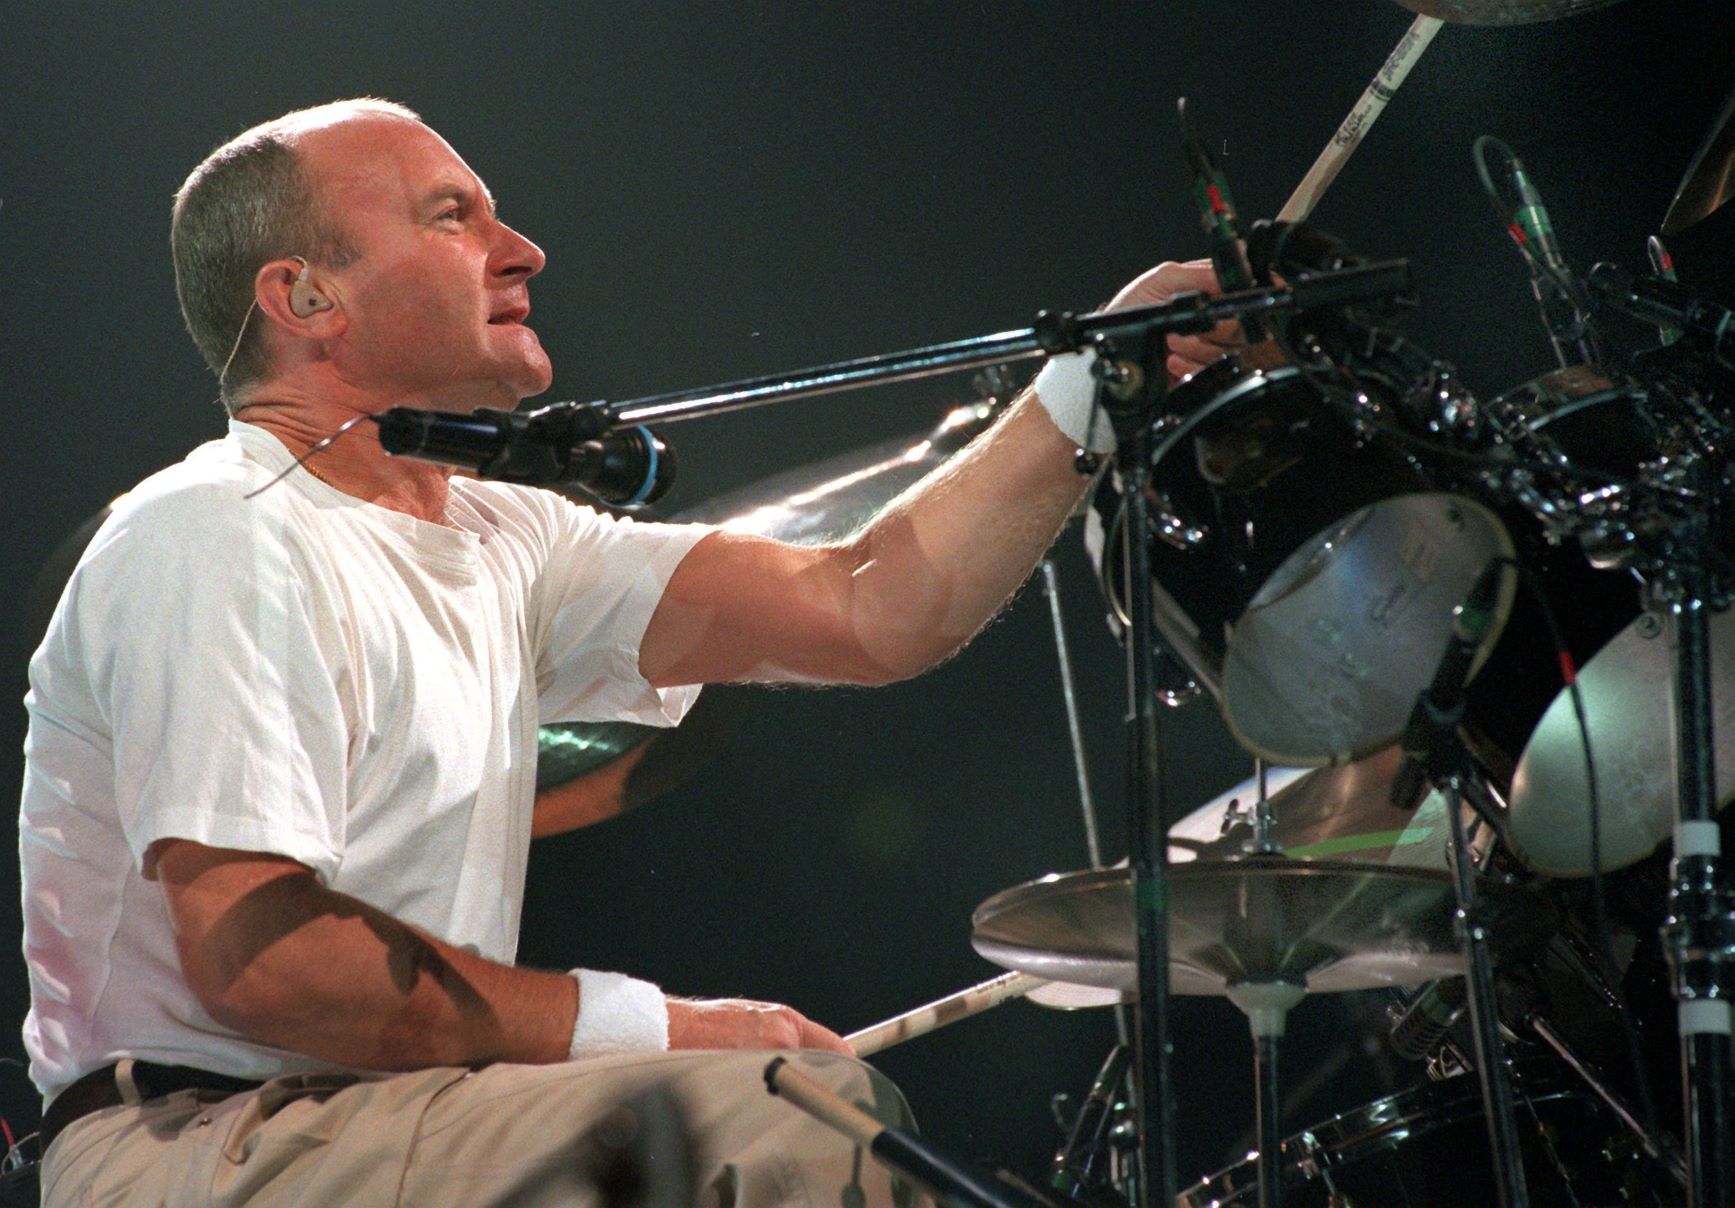 20210913-image-mb-dpa-Phil Collins am Schlagzeug